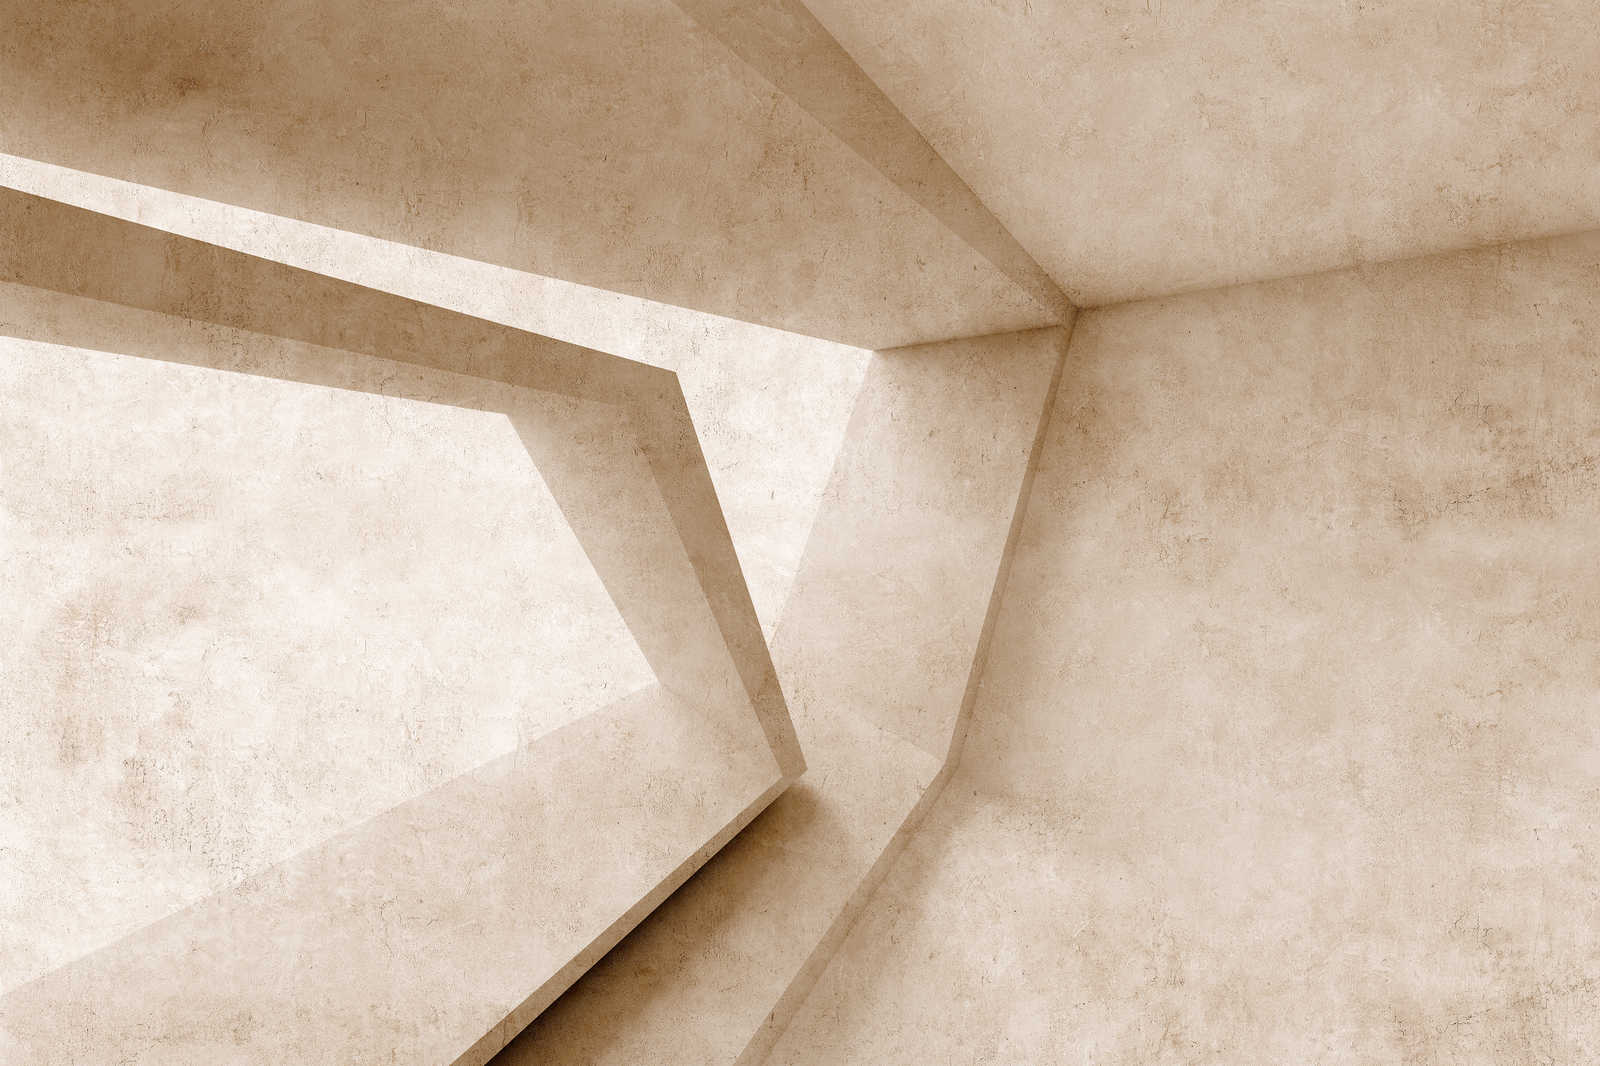             Futura 1 - Toile béton motif 3D - 1,20 m x 0,80 m
        